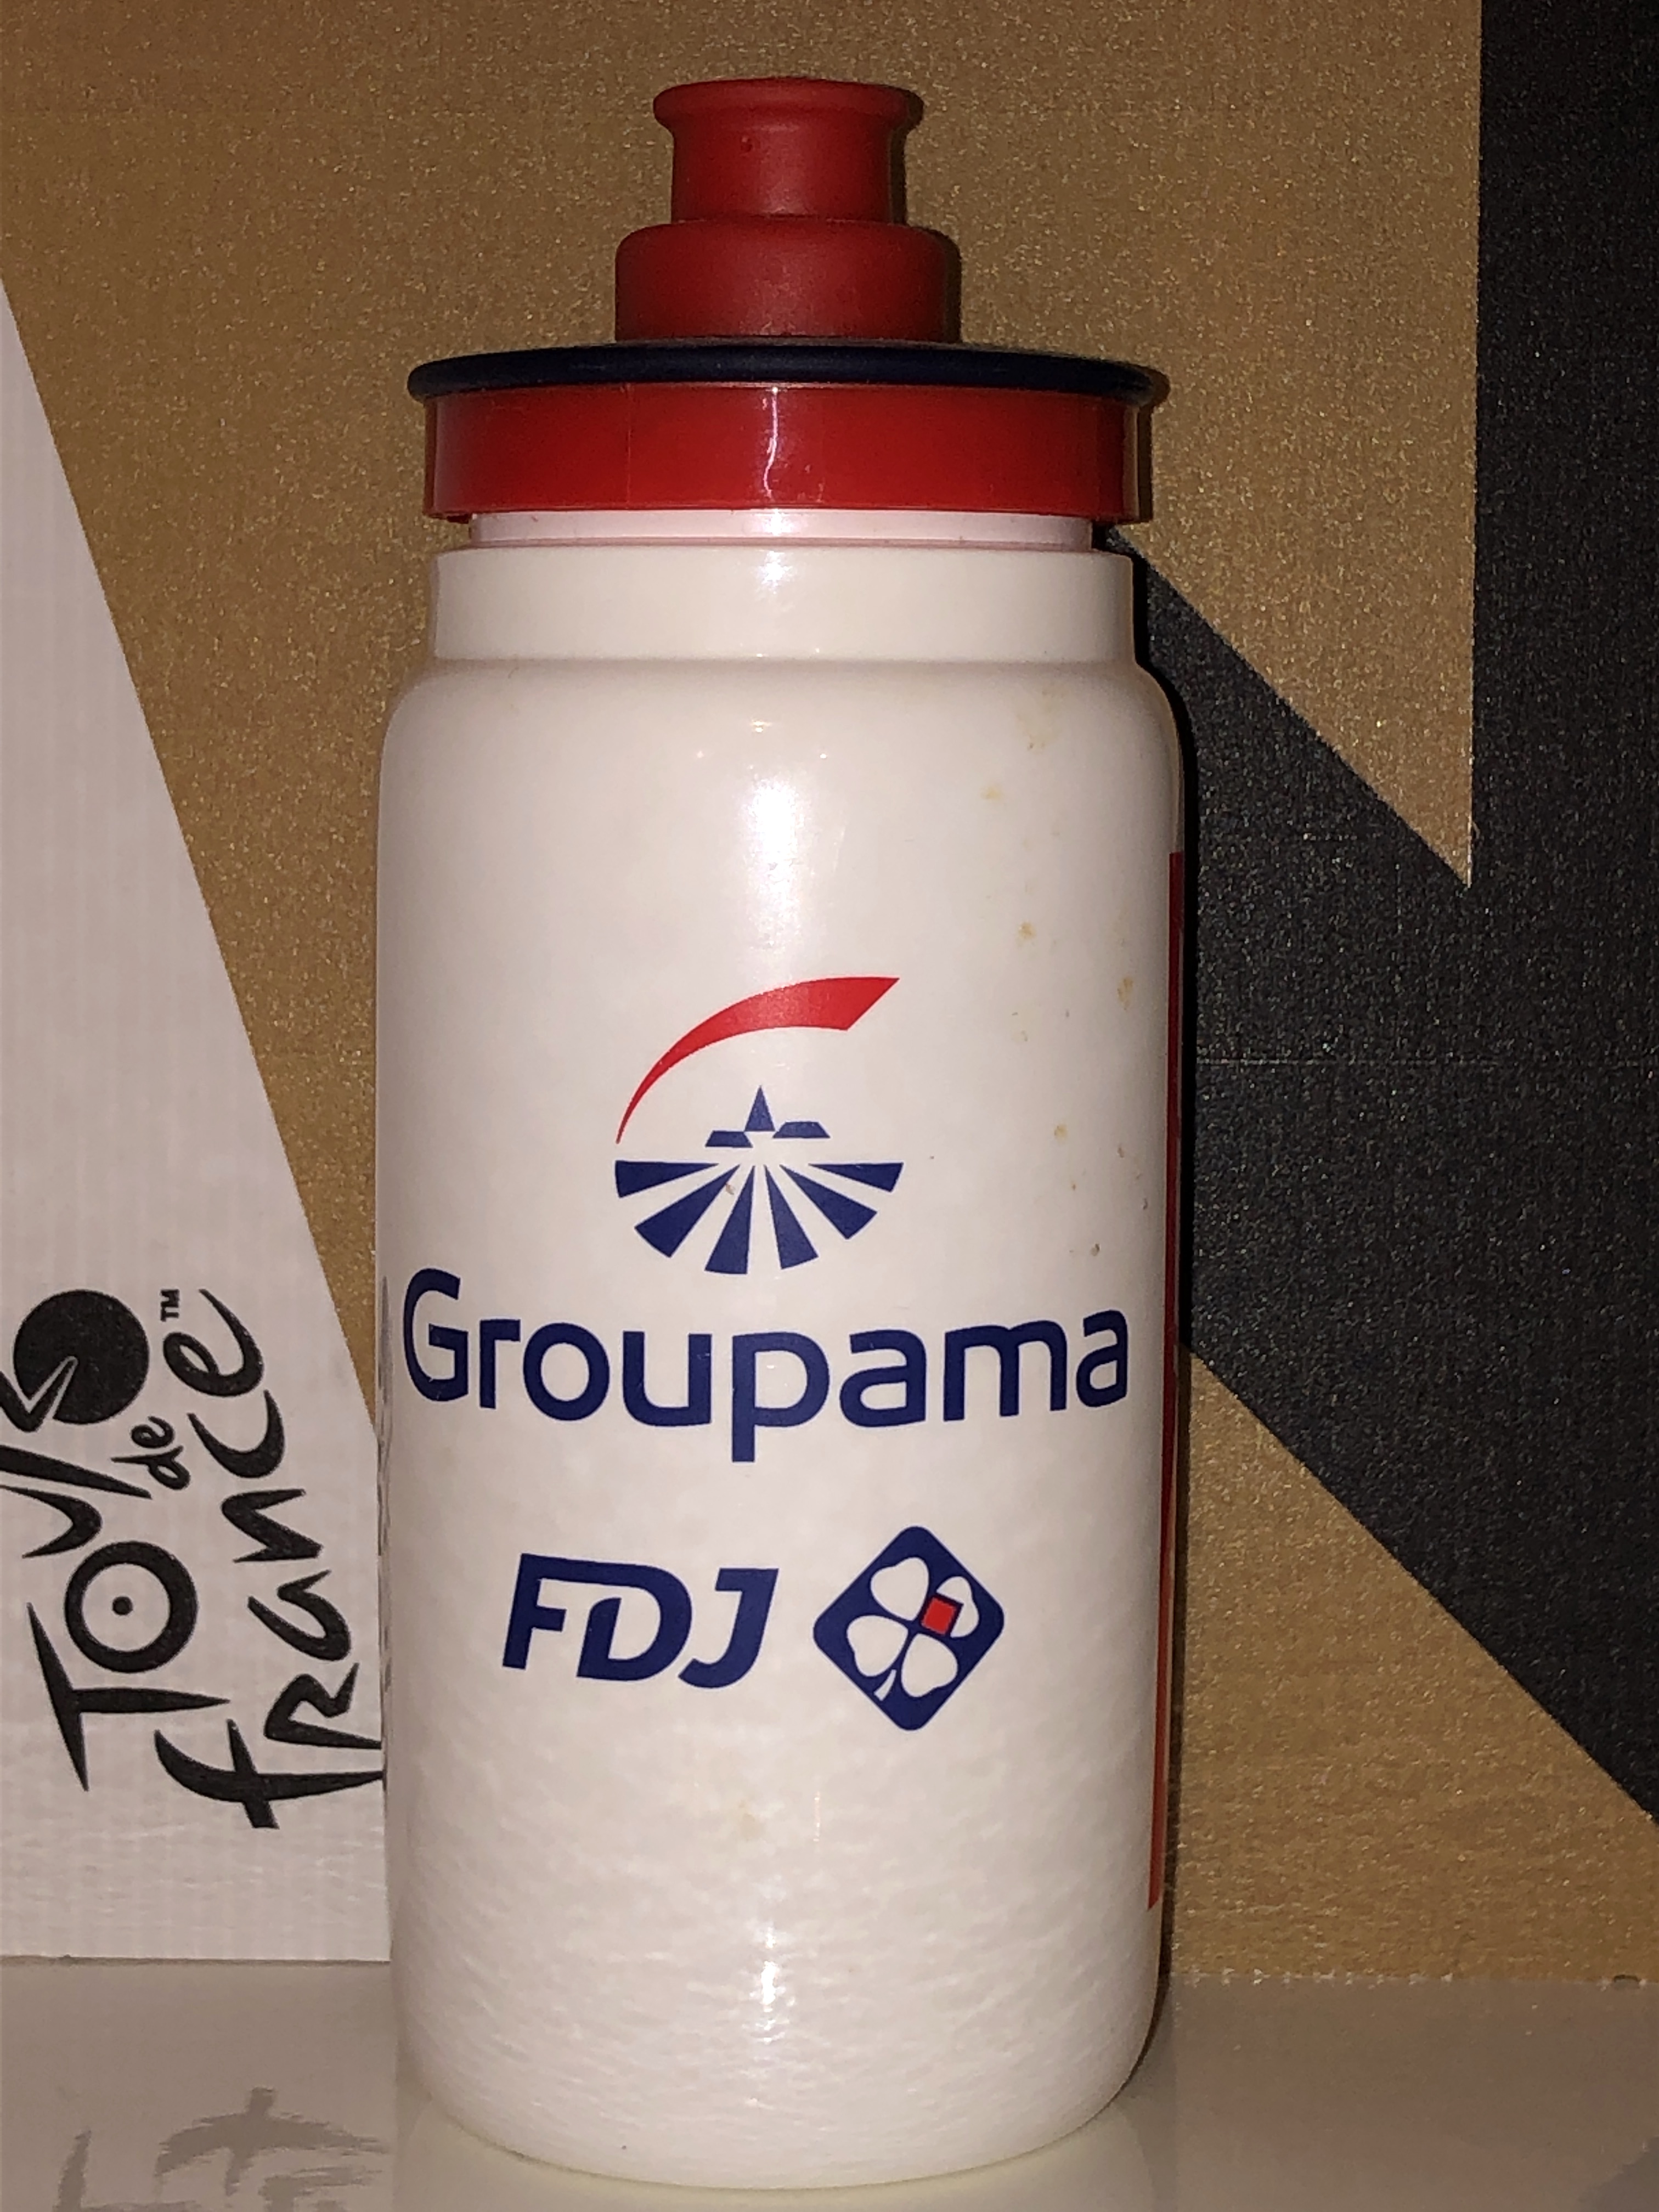 Elite Fly - Groupama FDJ - 2021